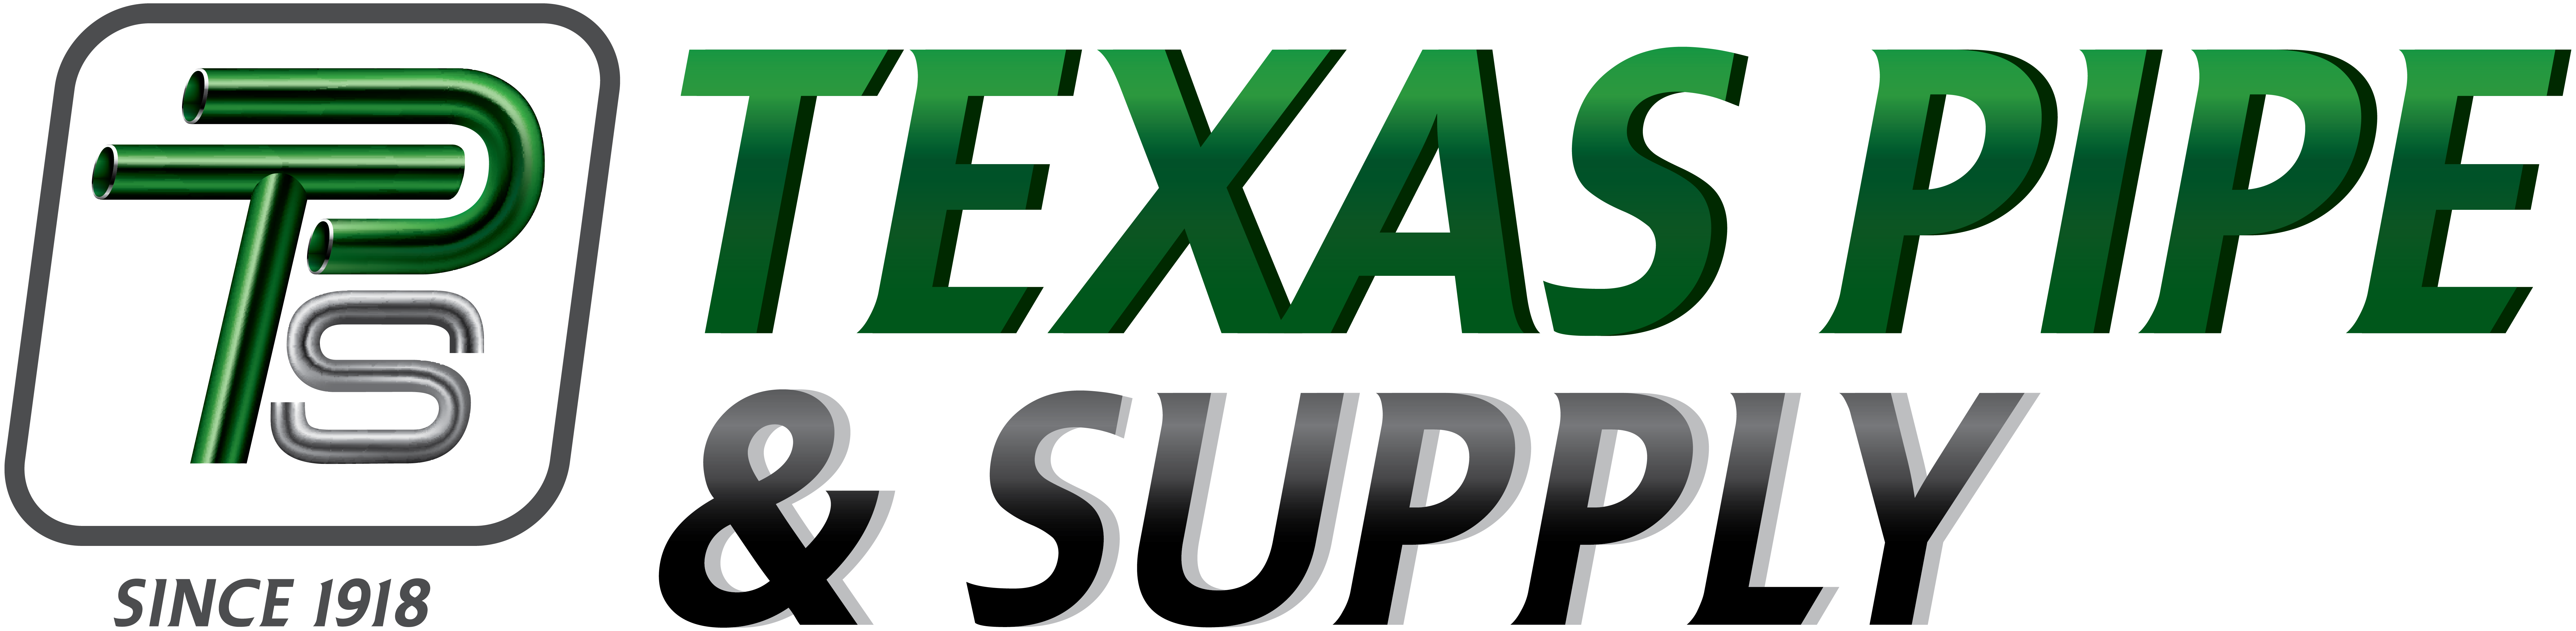 Texas Pipe & Supply Logo